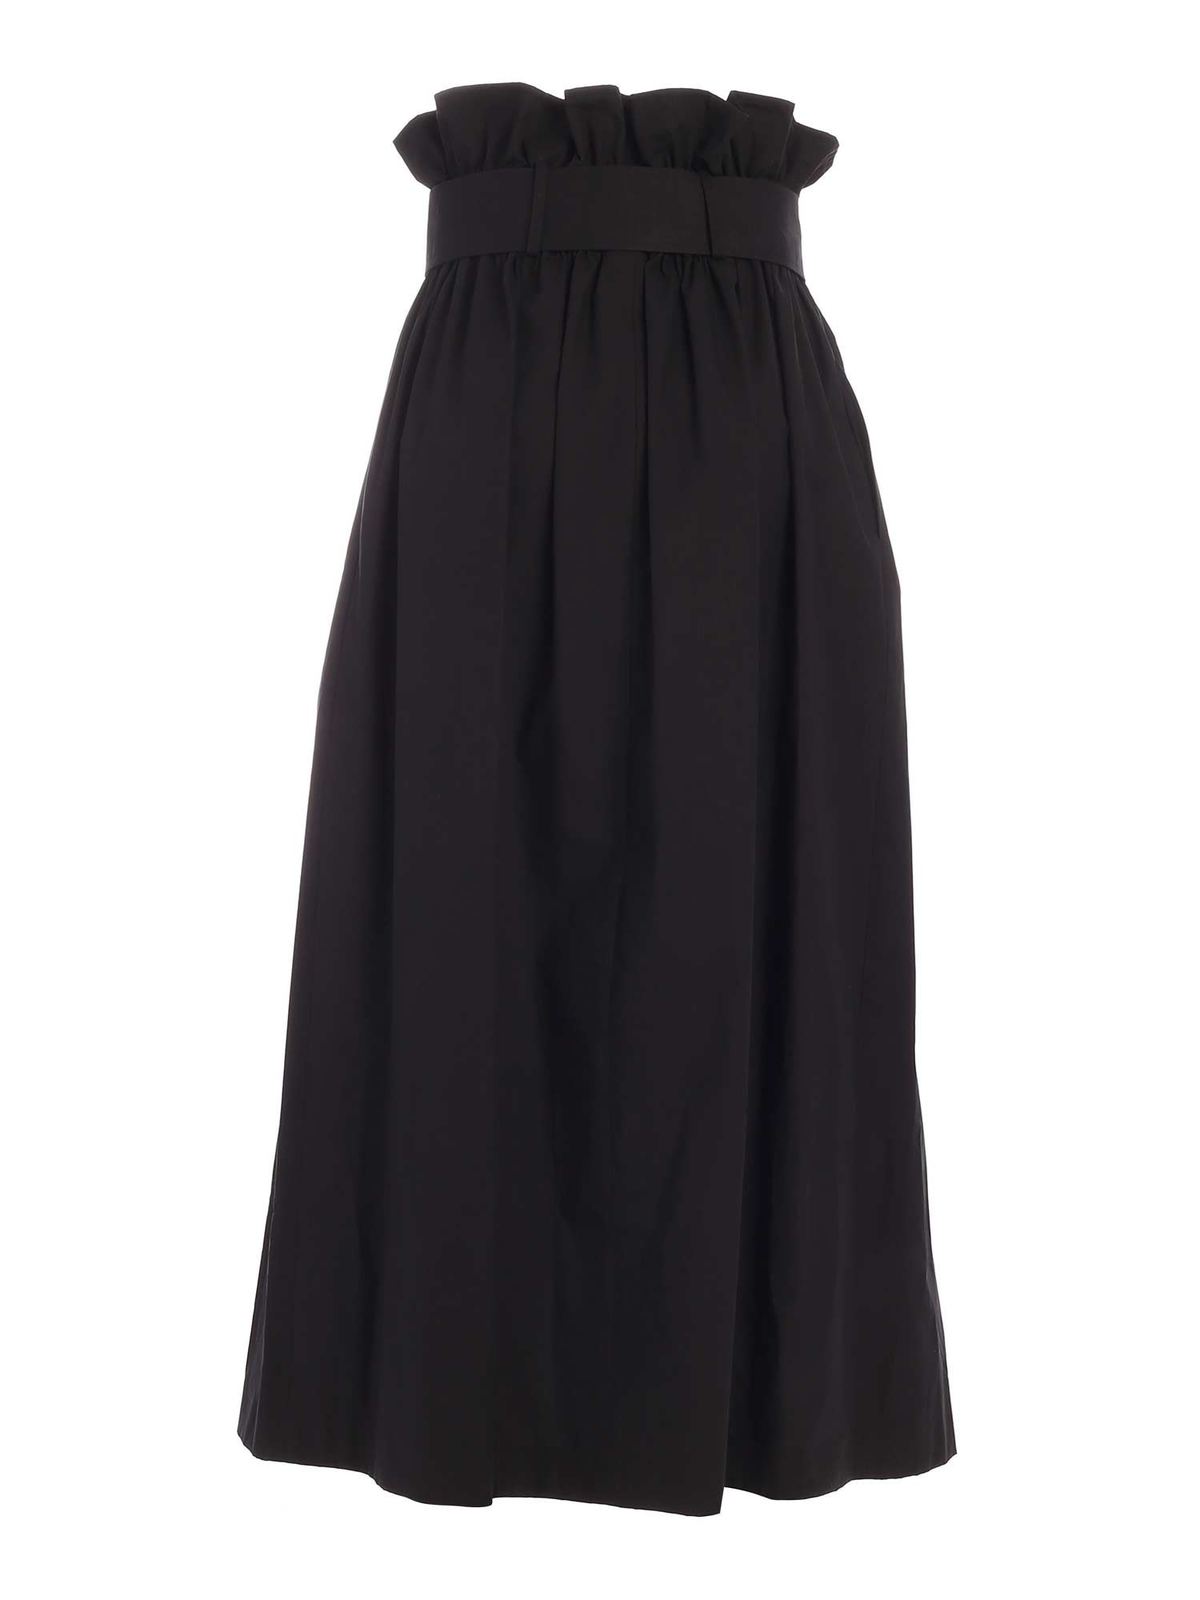 M.S.G.M. - Belt skirt in black - Long skirts - 3041MDD04A21710499